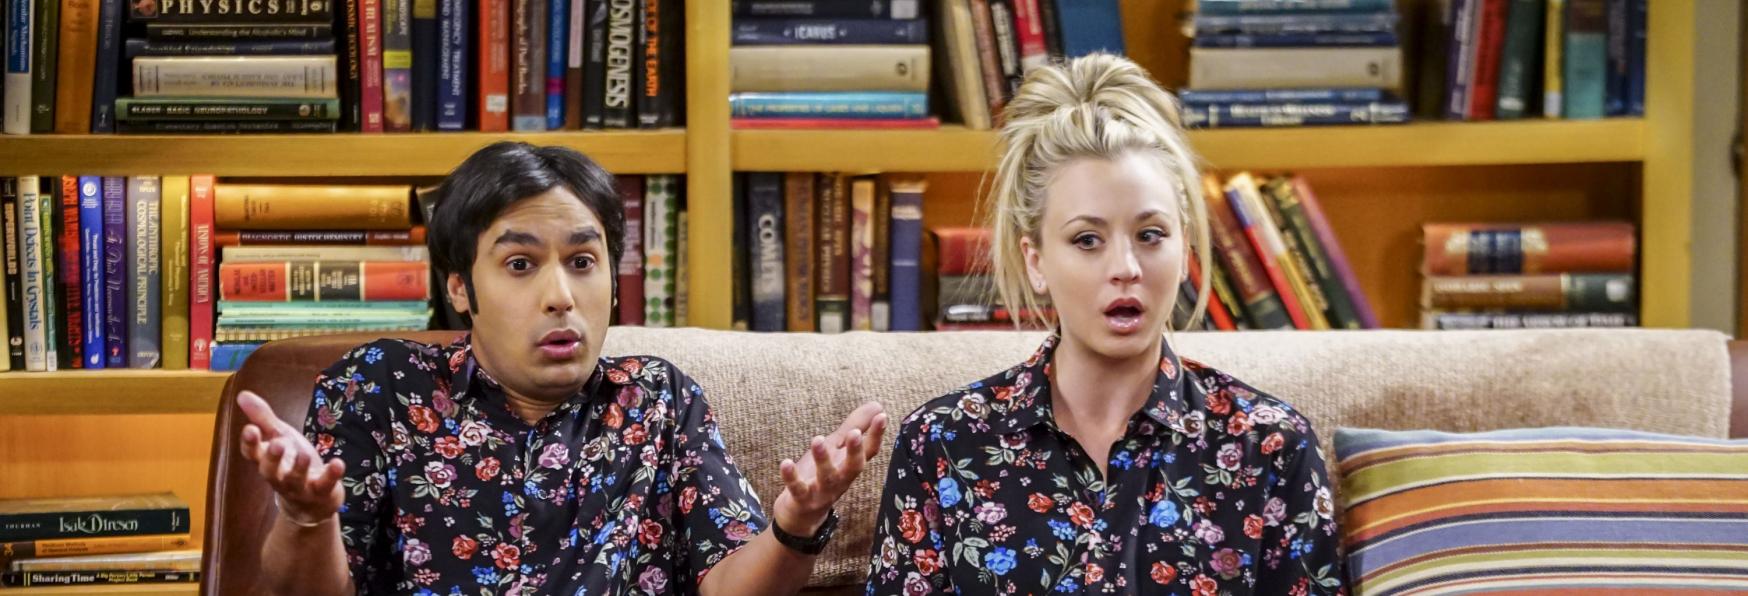 The Big Bang Theory: Kunal Nayyar racconta un Aneddoto del Dietro le Quinte della Serie TV